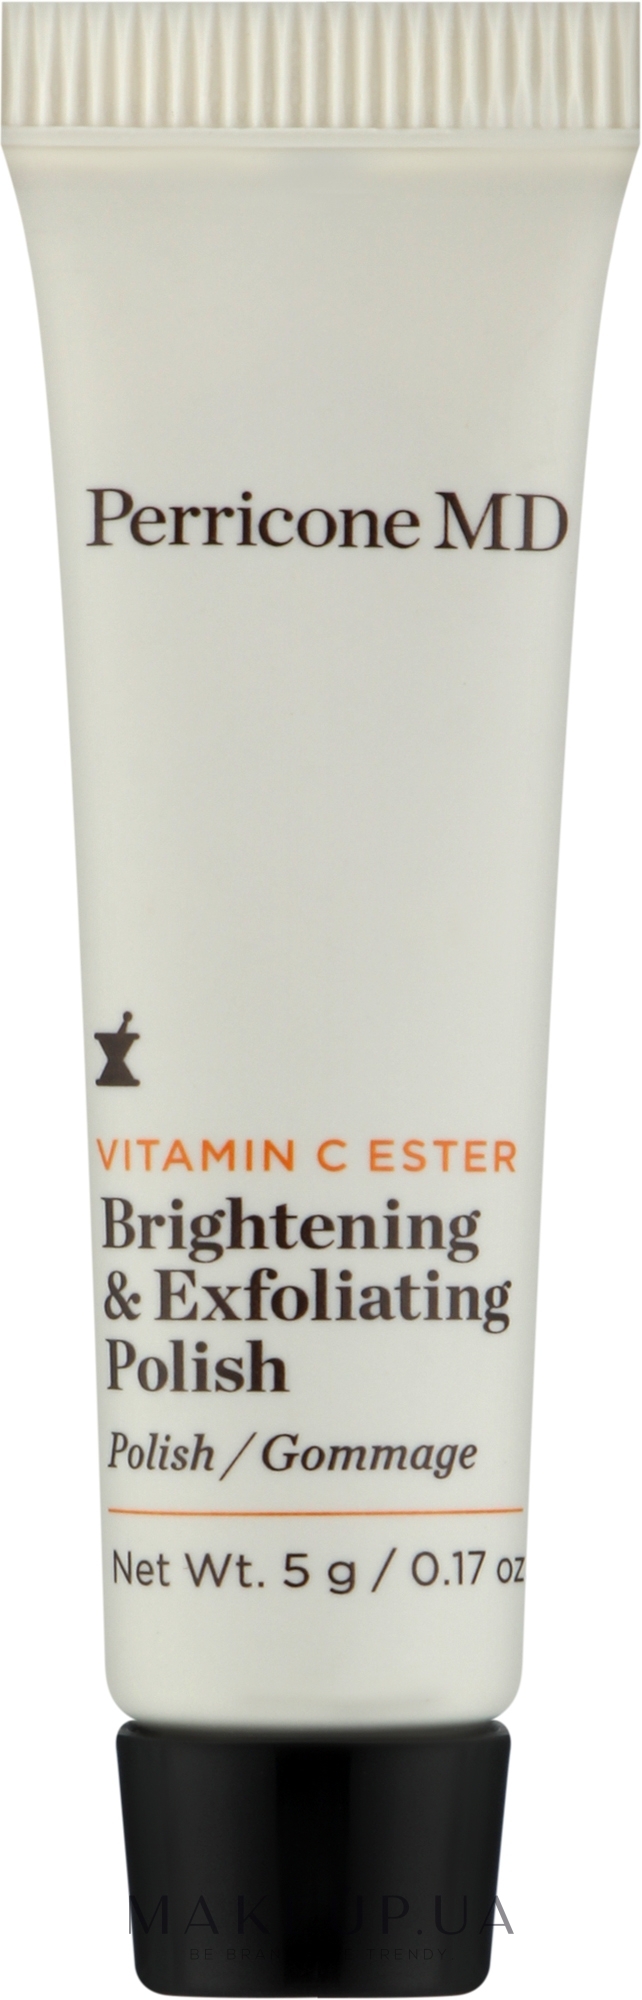 Пілінг для обличчя - Perricone MD Vitamin C Ester Brightening & Exfoliating Polish (пробник) — фото 5g